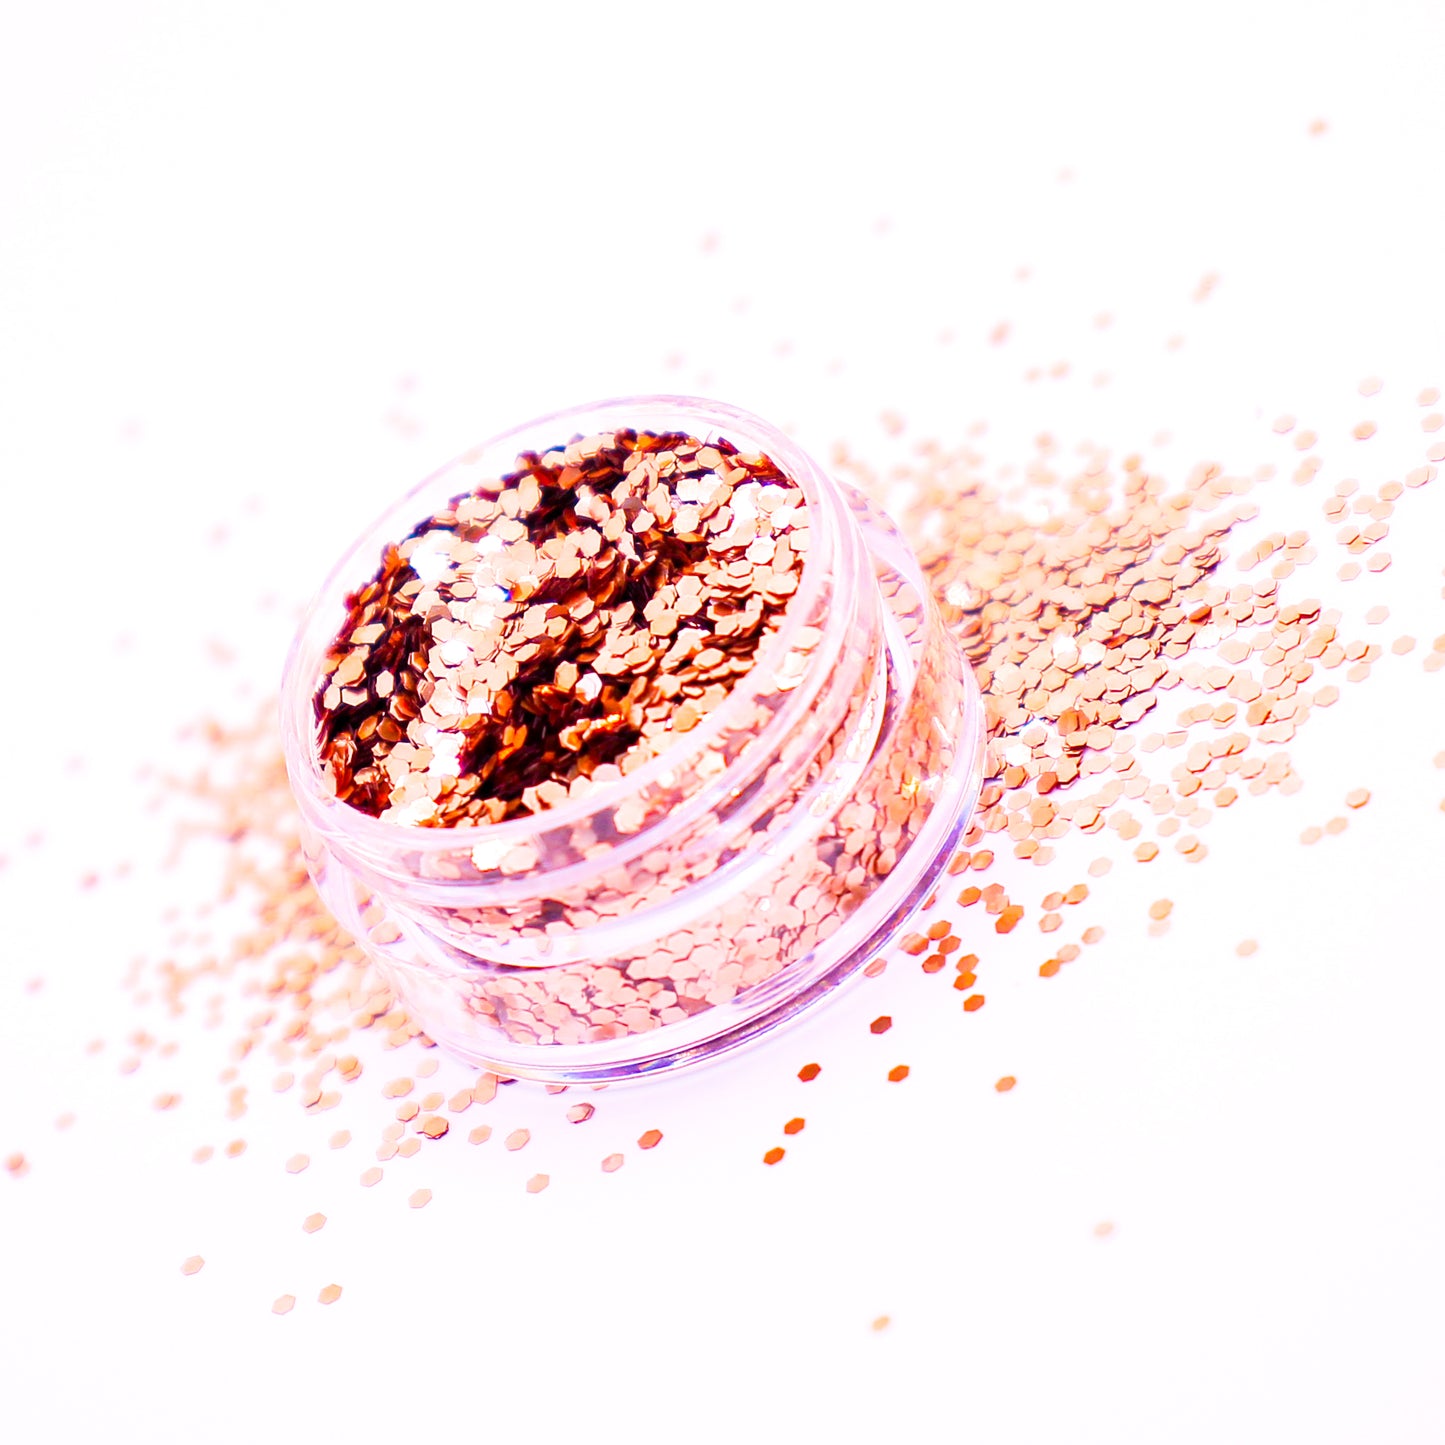 Rose Gold Chunky Biodegradable Glitter